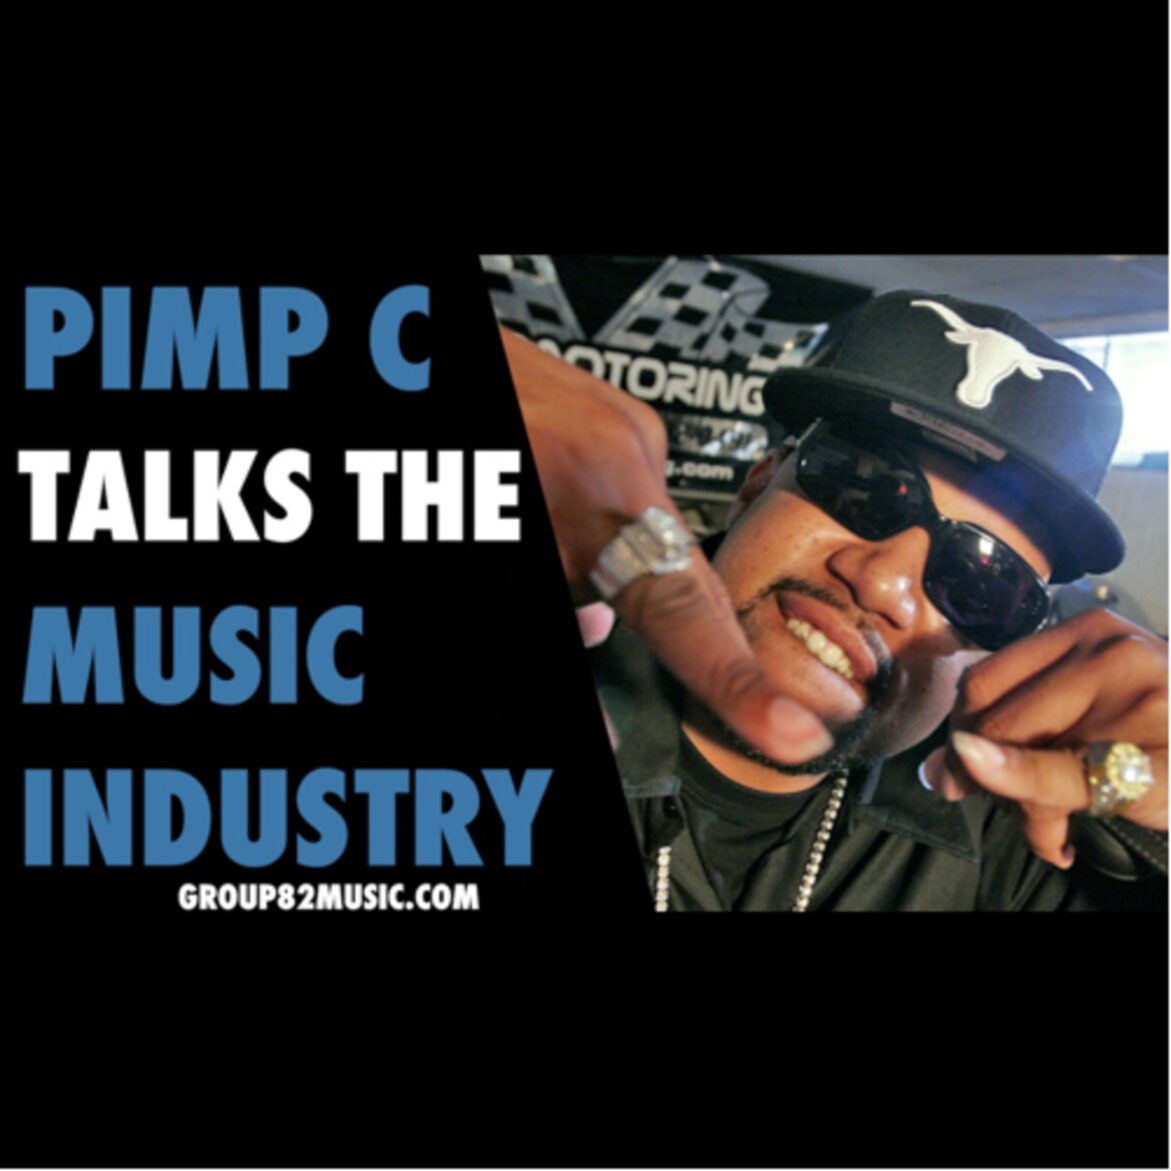 Black Podcasting - Pimp C Talks The Music Industry